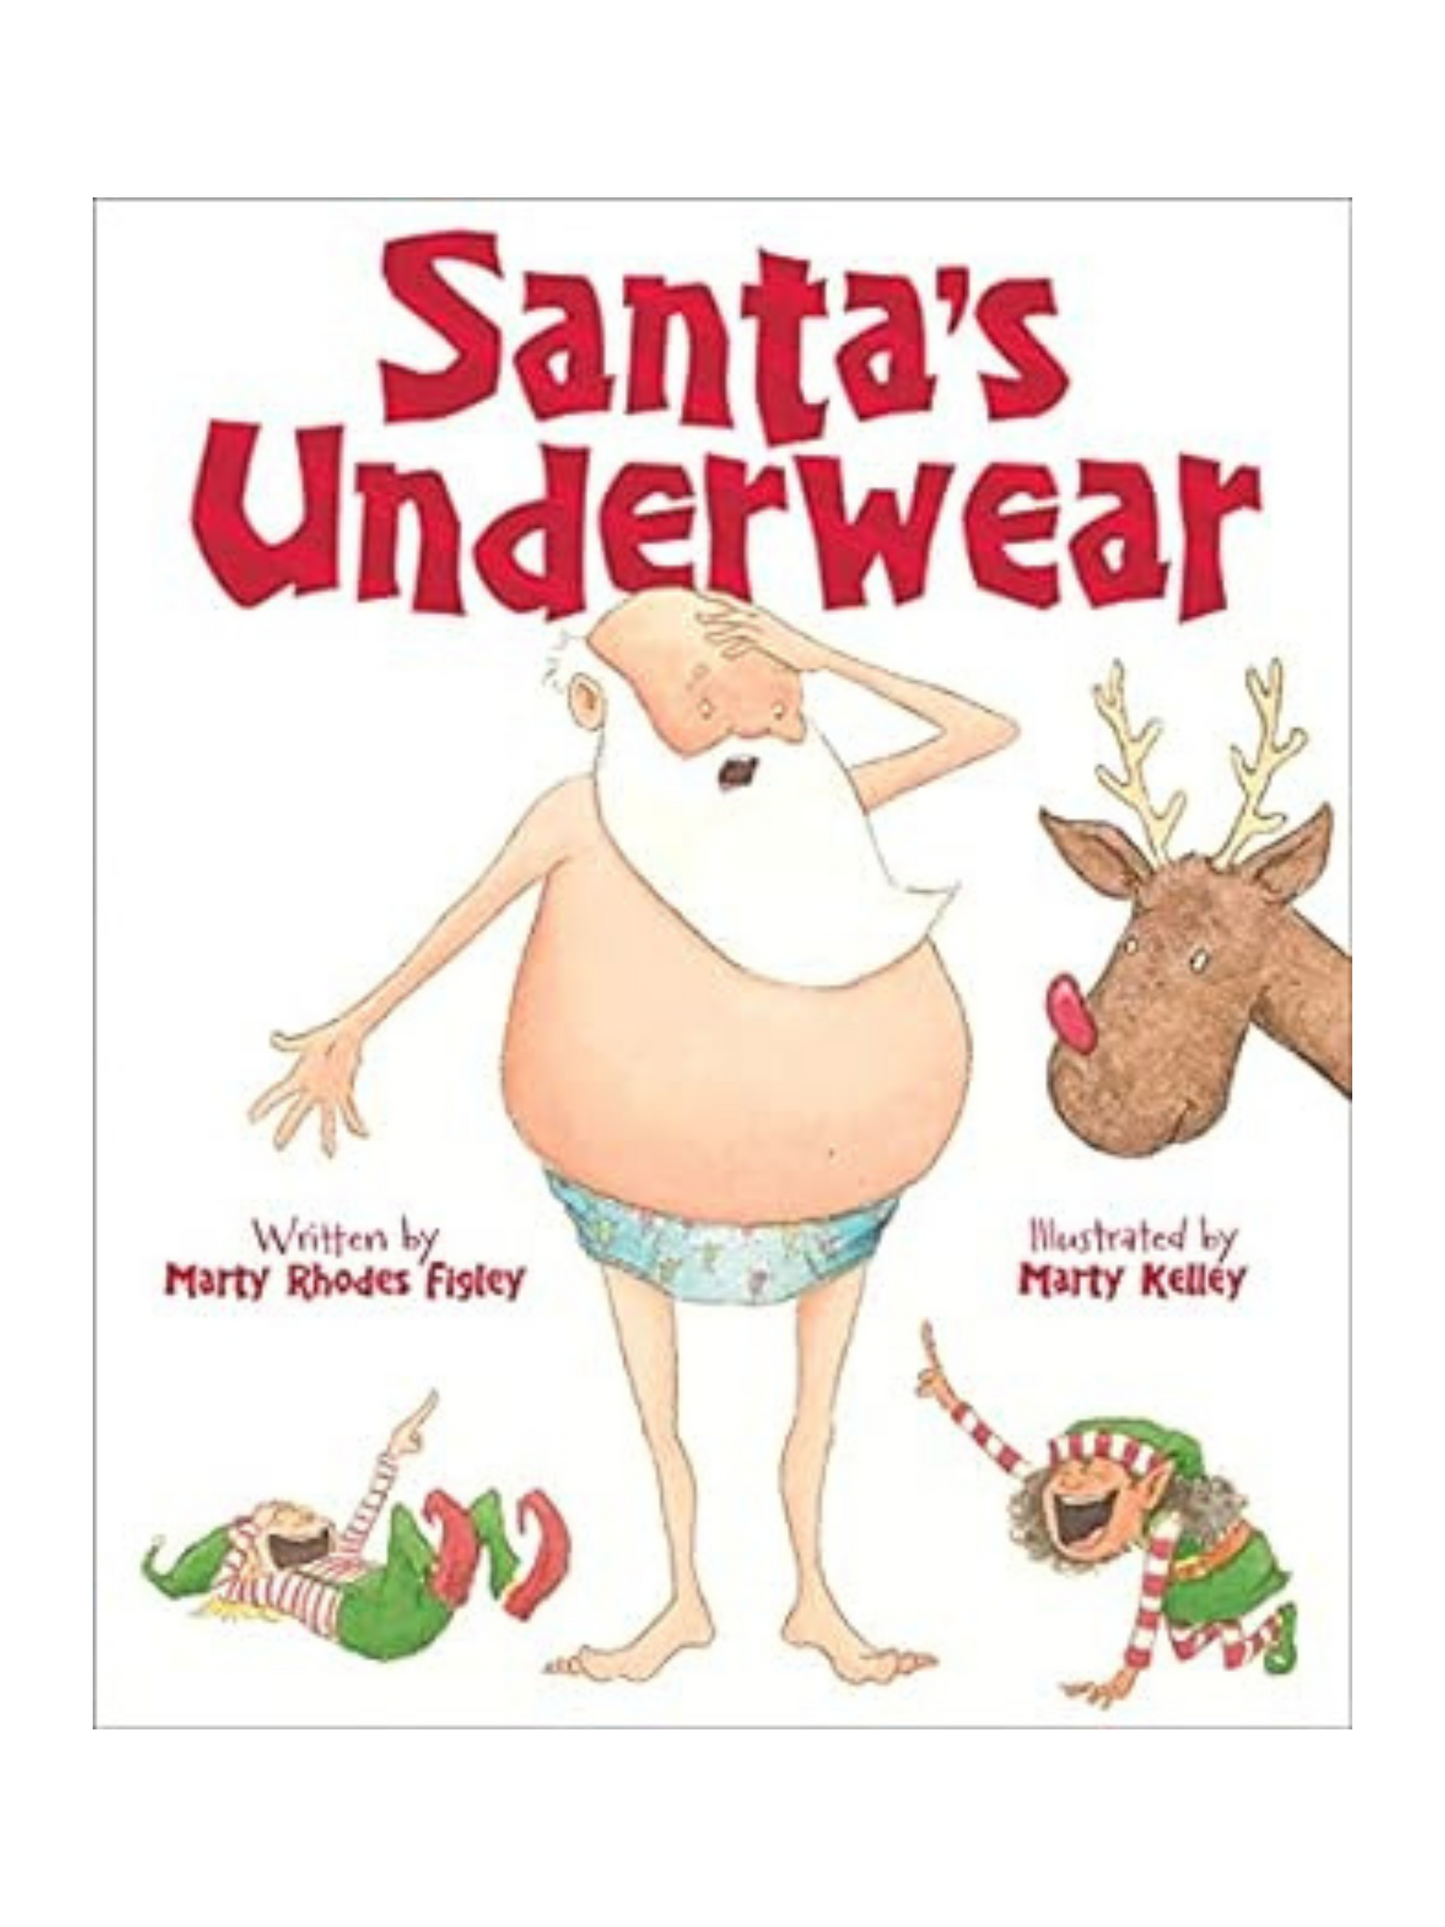 SANTA'S UNDERWEAR CHILDREN'S HOLIDAY BOOK - THE HIP EAGLE BOUTIQUE